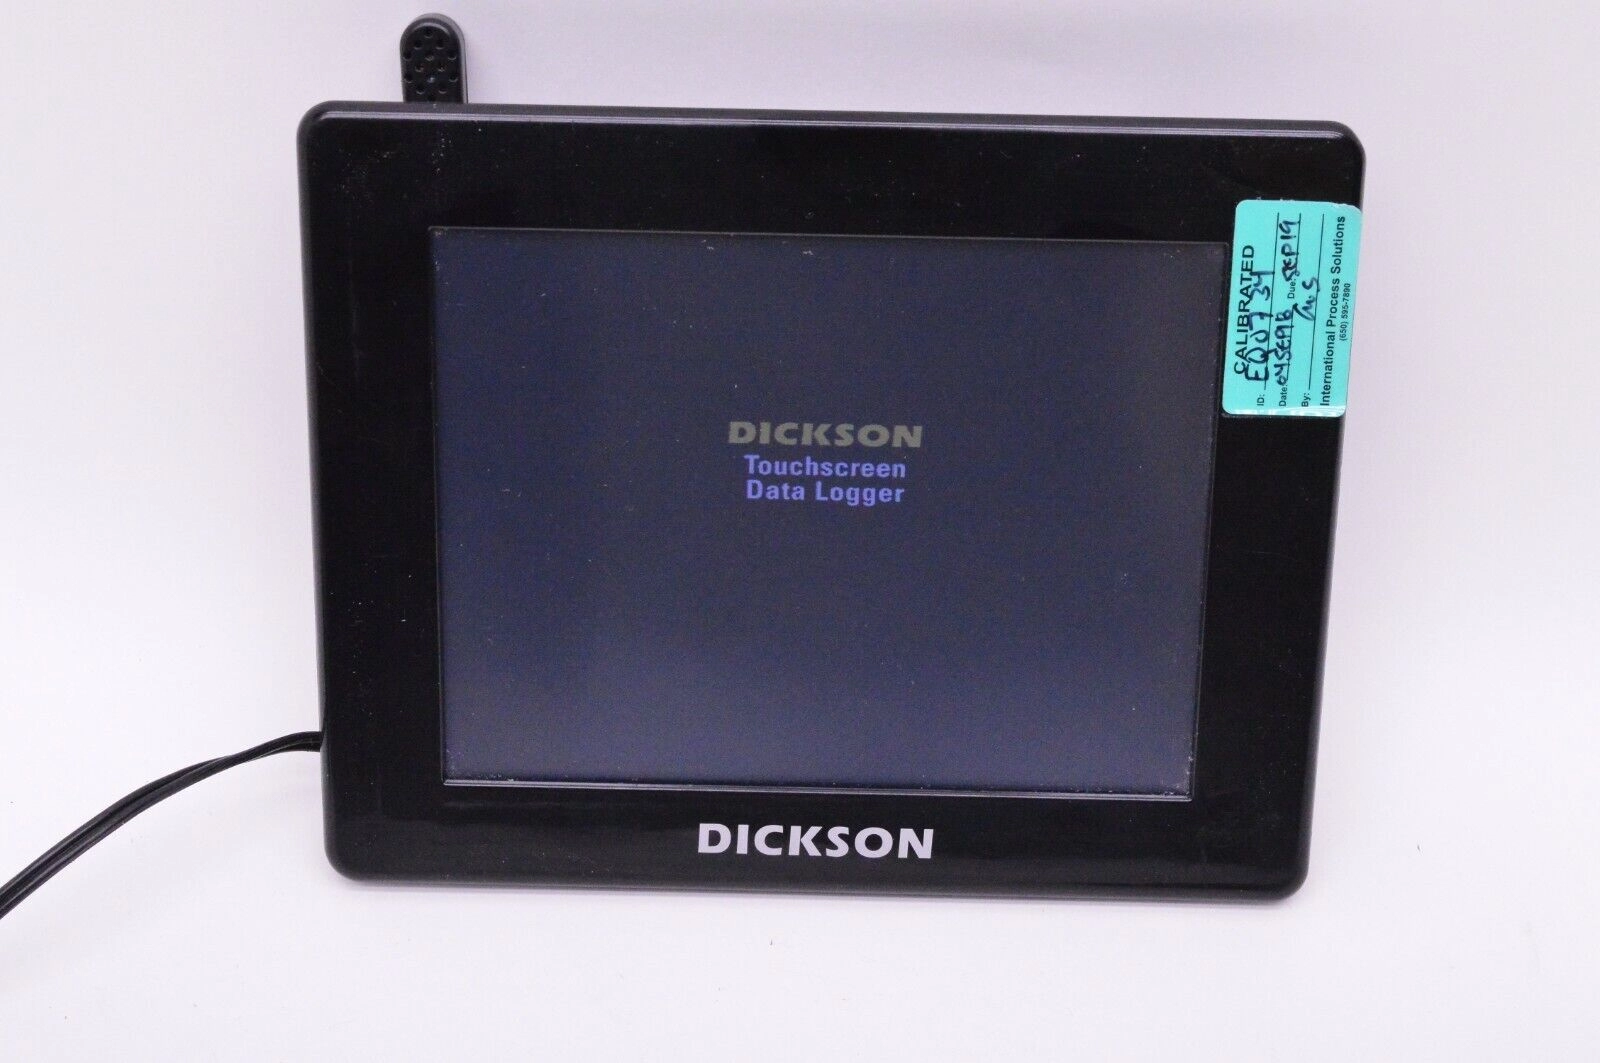 Dickson data FH625 digital touchscreen temperature